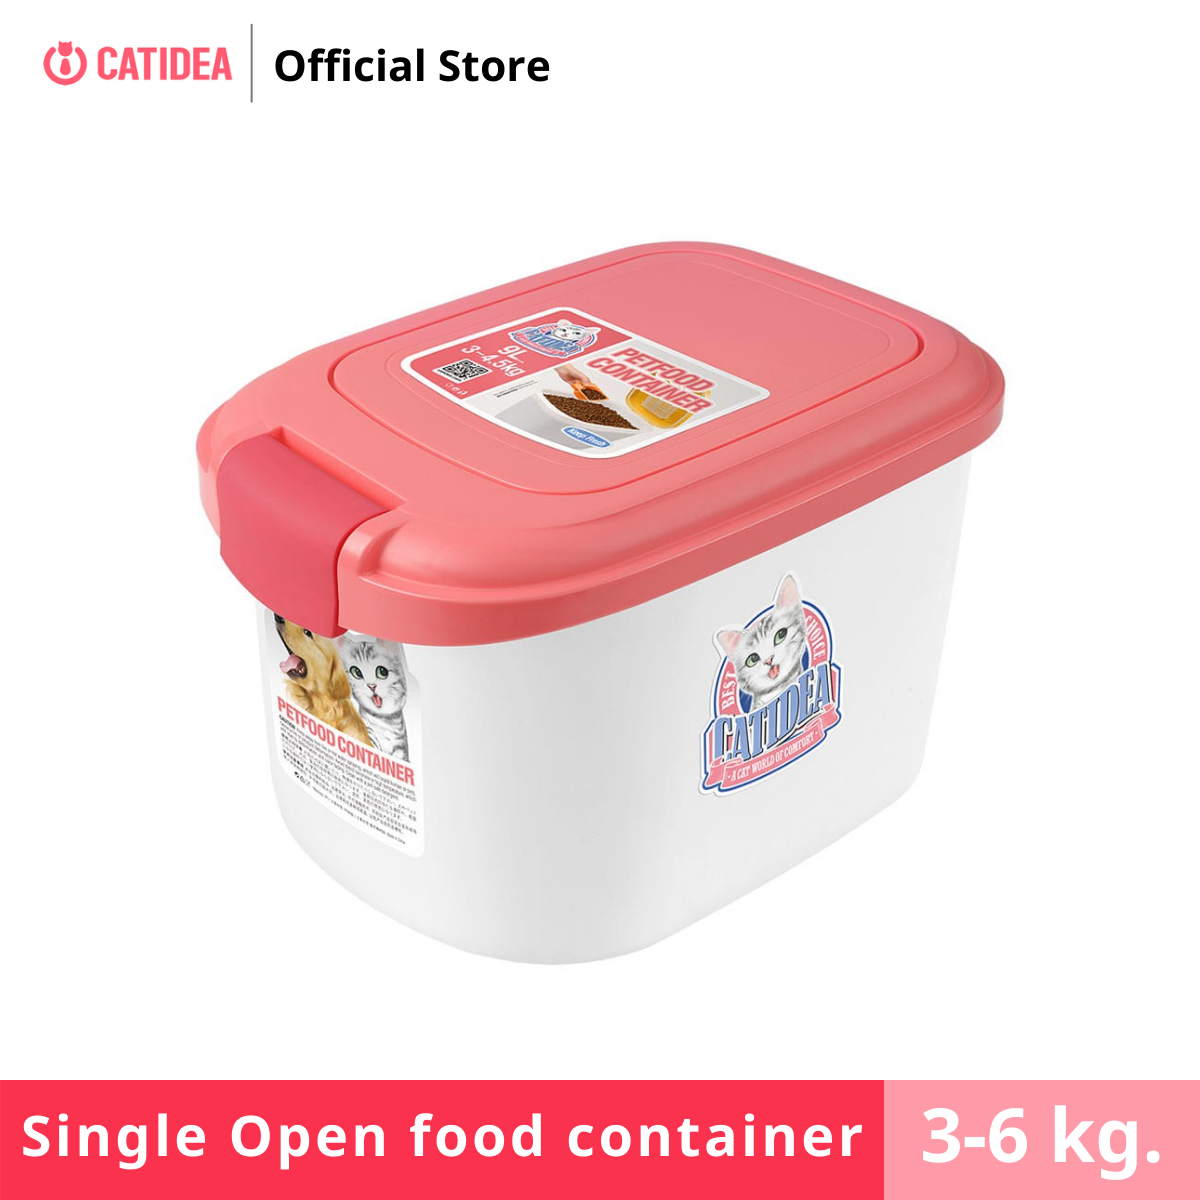 Catidea Single Open food container 3-6 kg. ถังเก็บอาหารสัตว์เลี้ยง พร้อมช้อนตัก ขนาด 3-6 กิโลกรัม